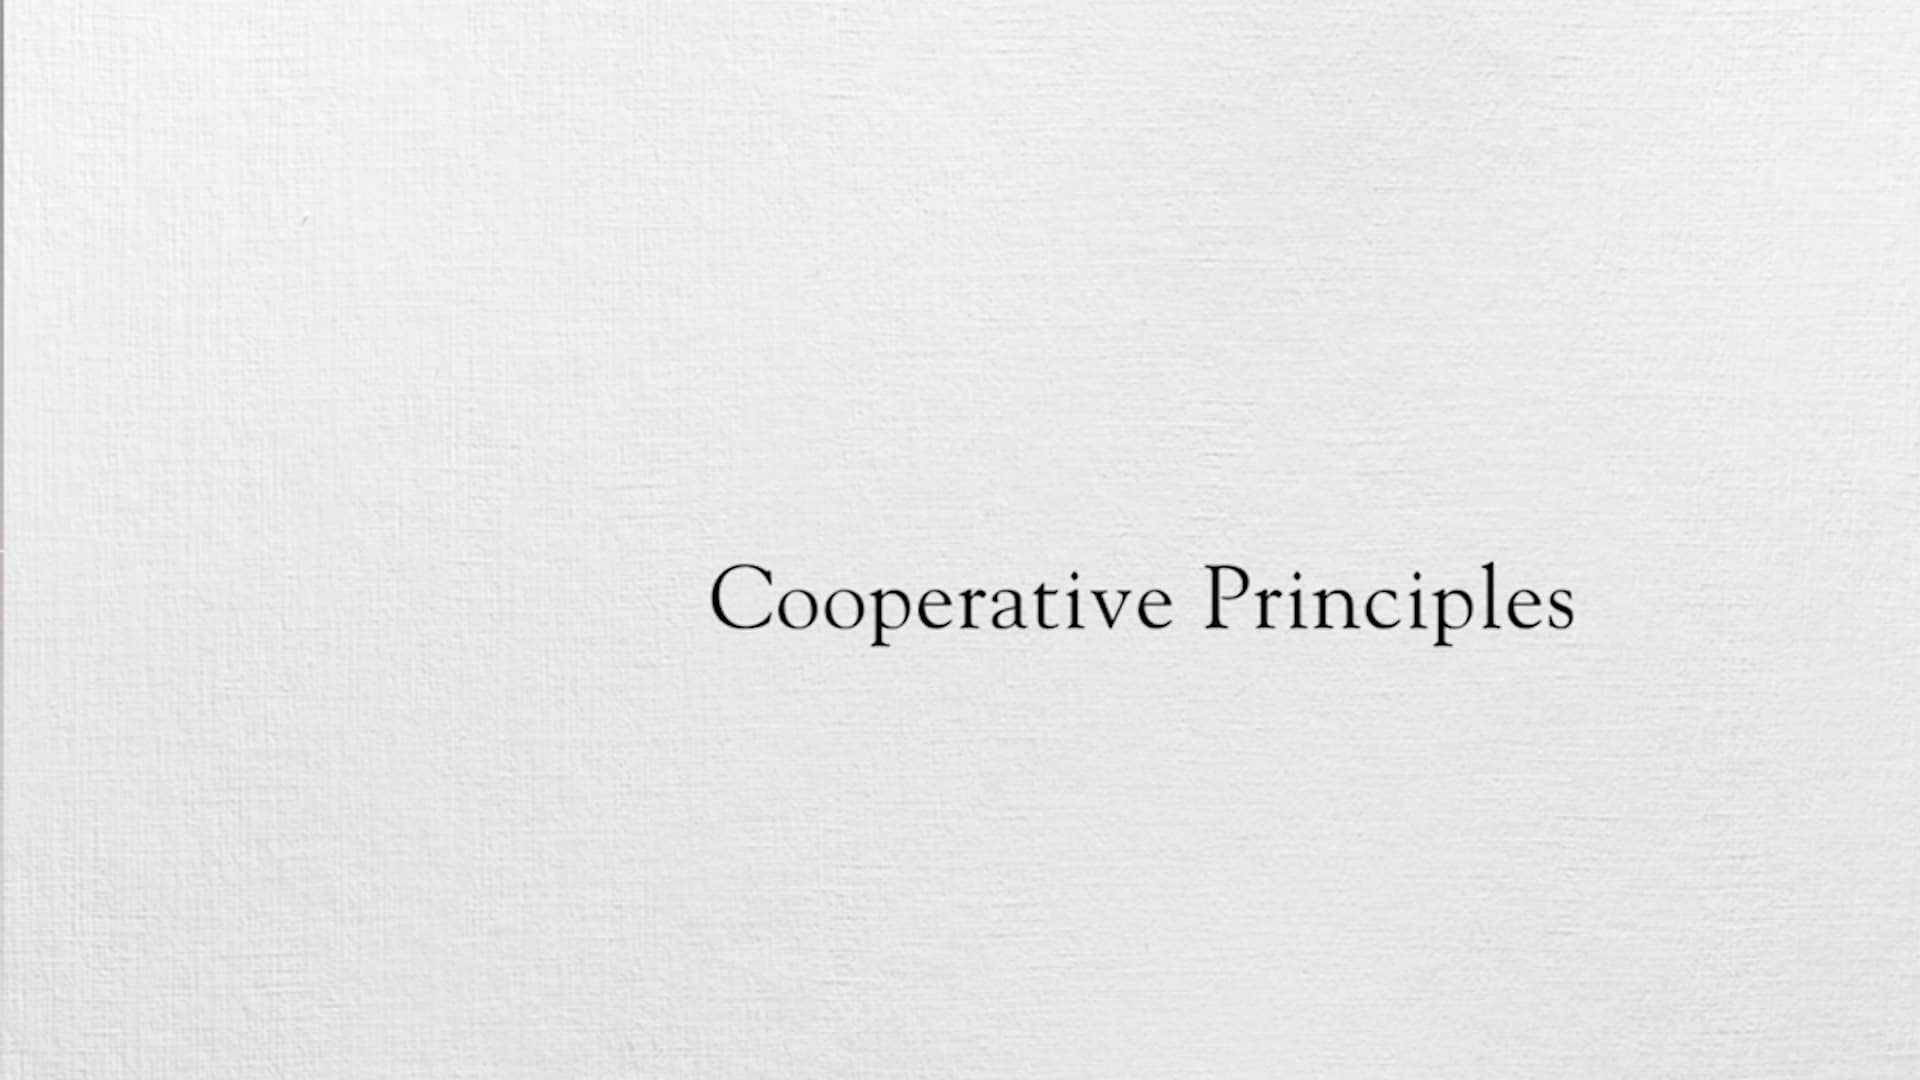 Video: Cooperative Principles Video